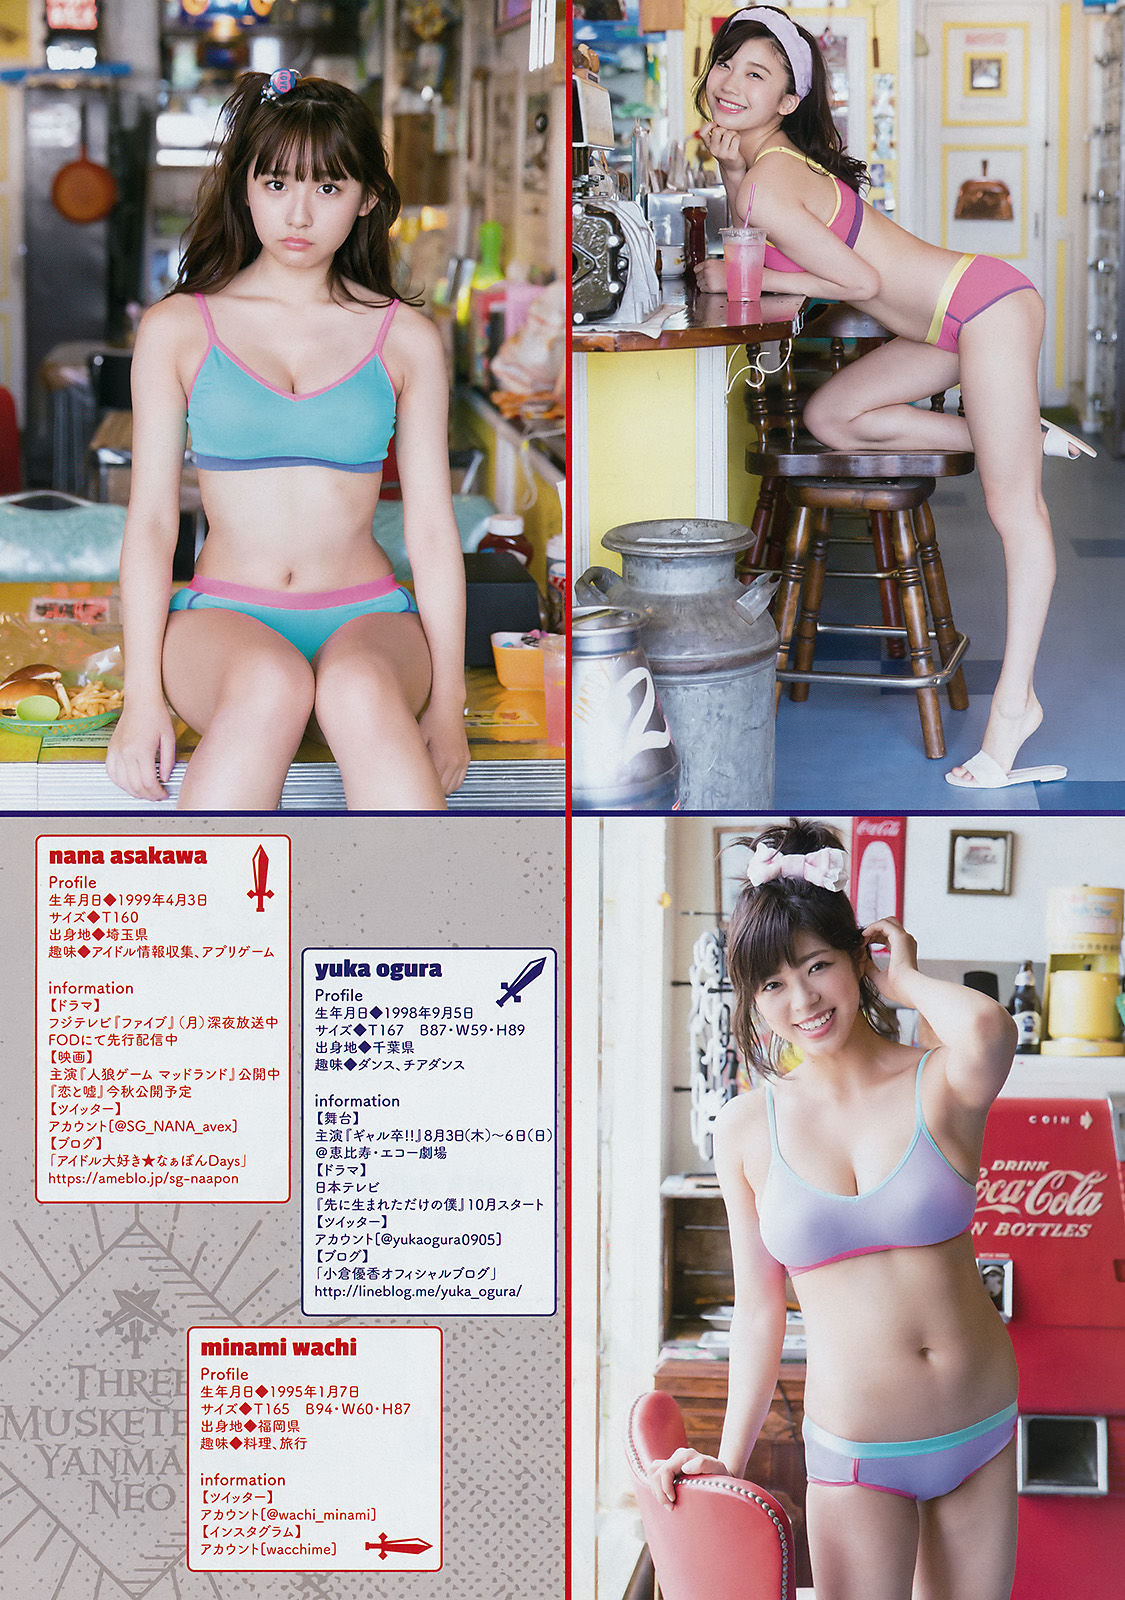 [Young Magazine]姐妹花:小仓优香无水印写真作品免费在线(11P)